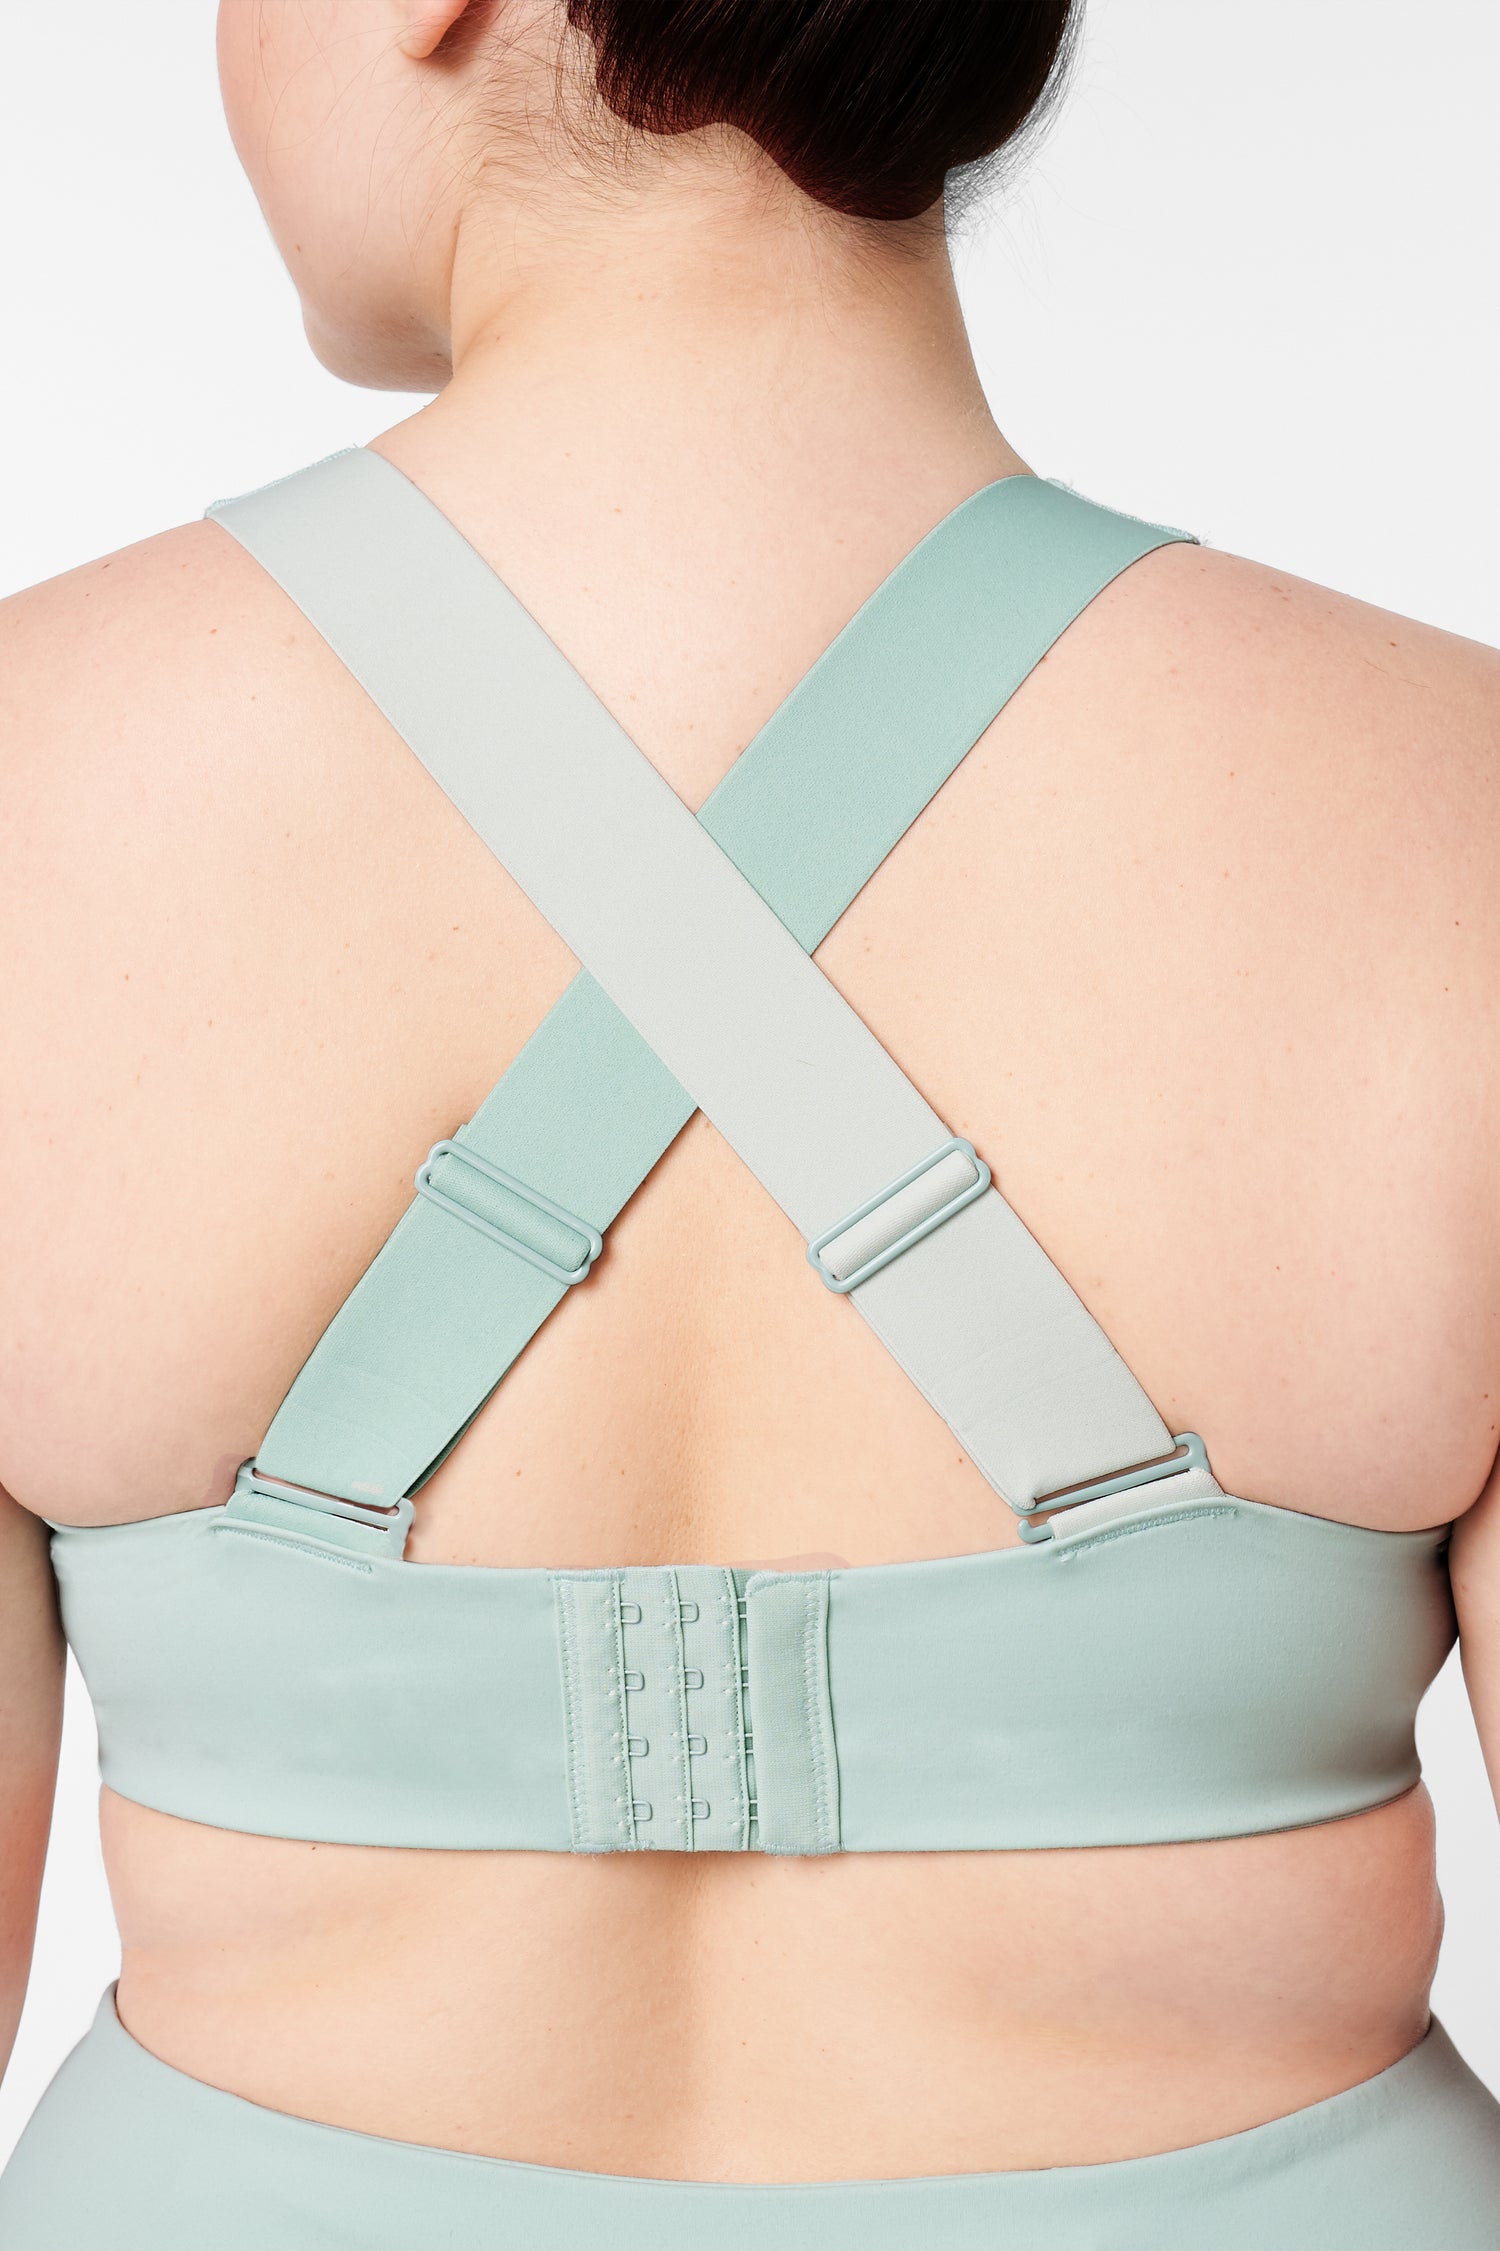 It brings women more security: Sports Bra breast pads